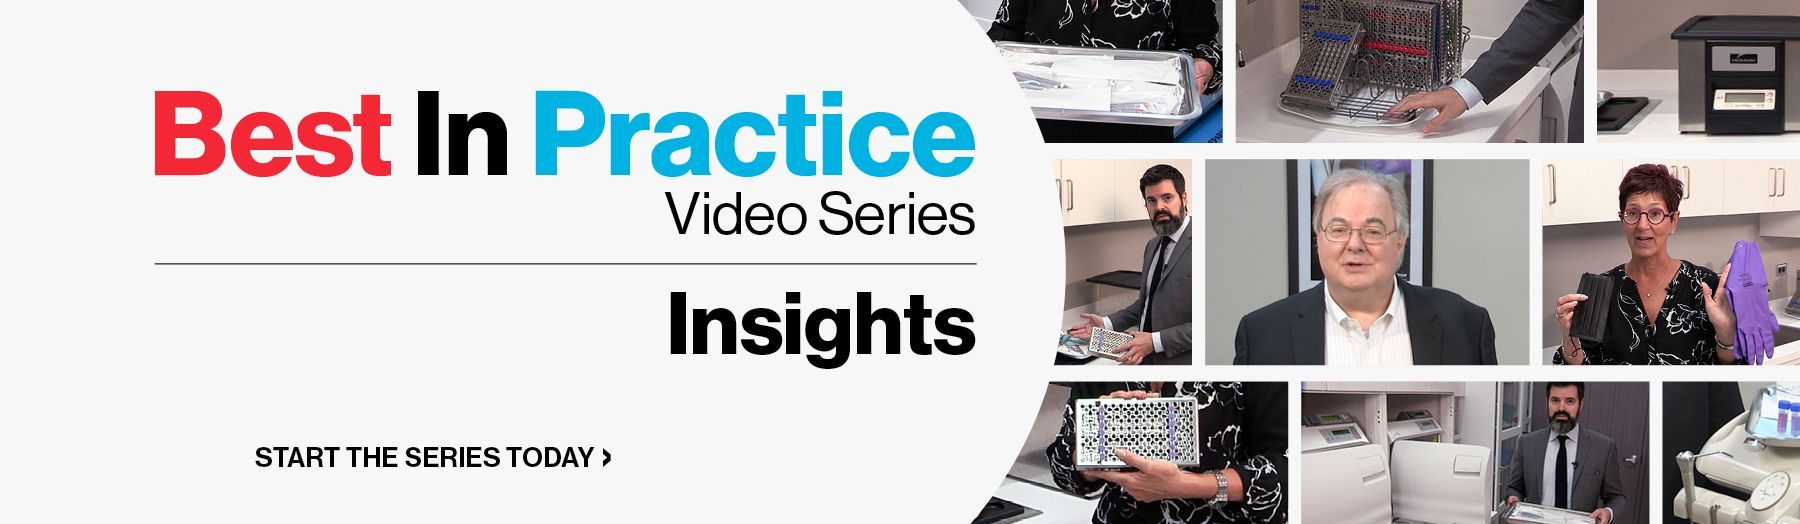 Best In Practice Video Series Insights